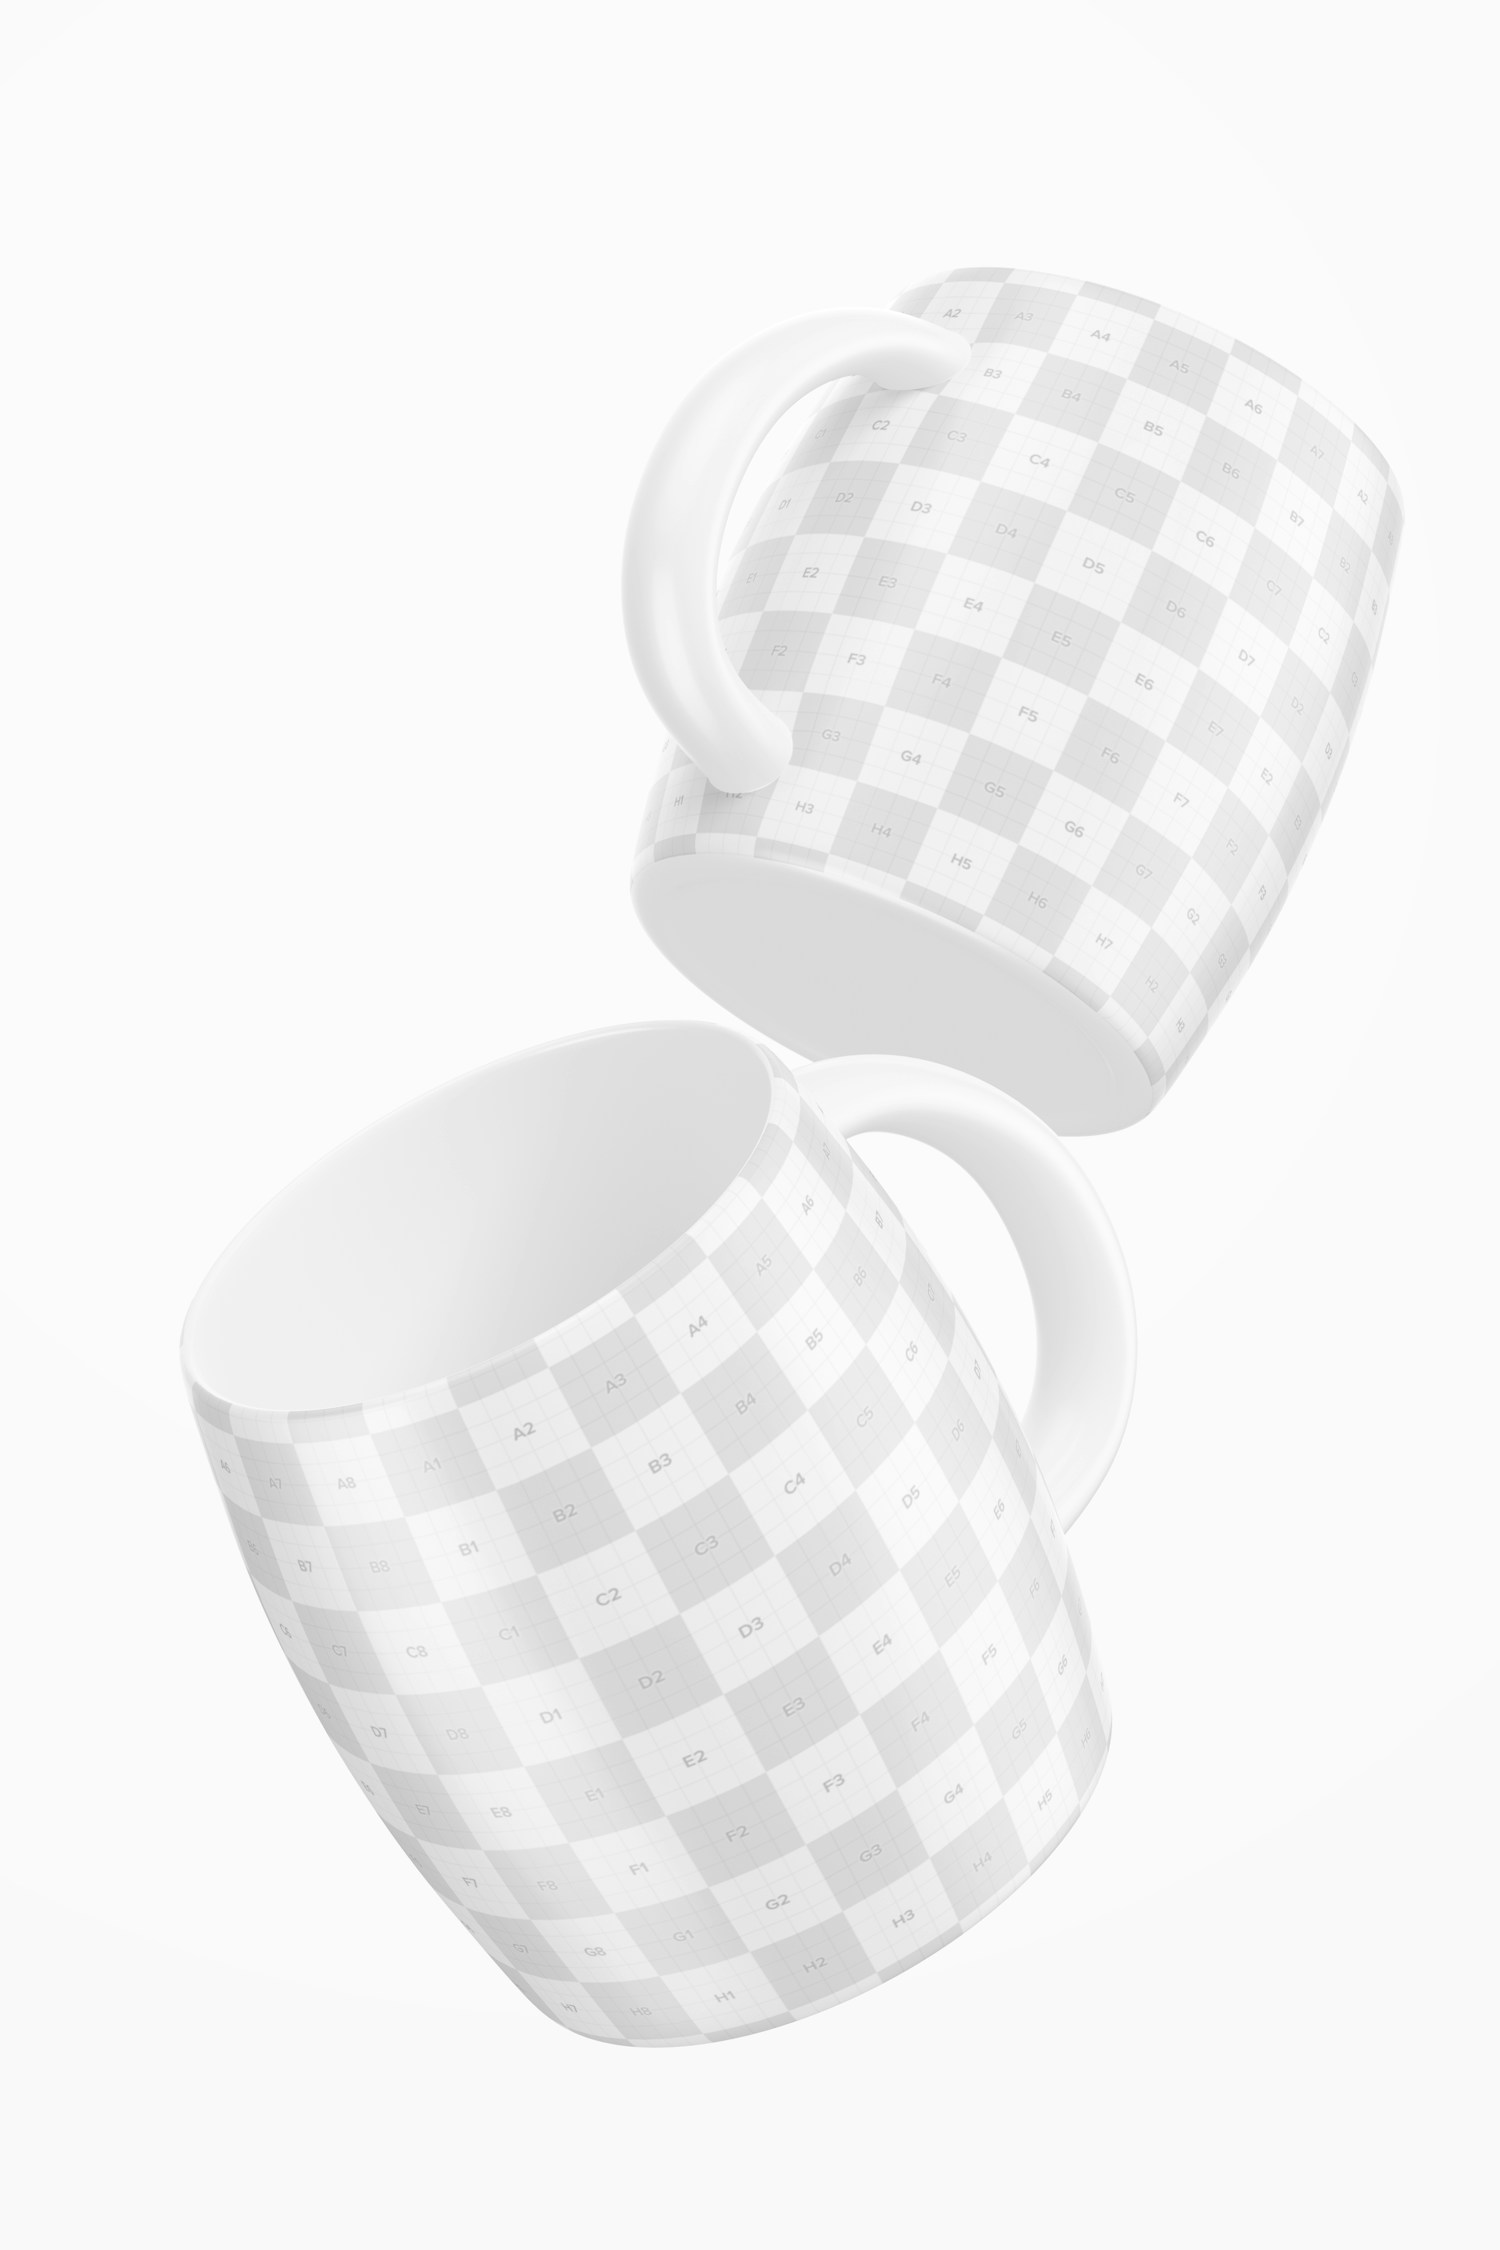 14 oz Ceramic Coffee Mugs Mockup, Floating